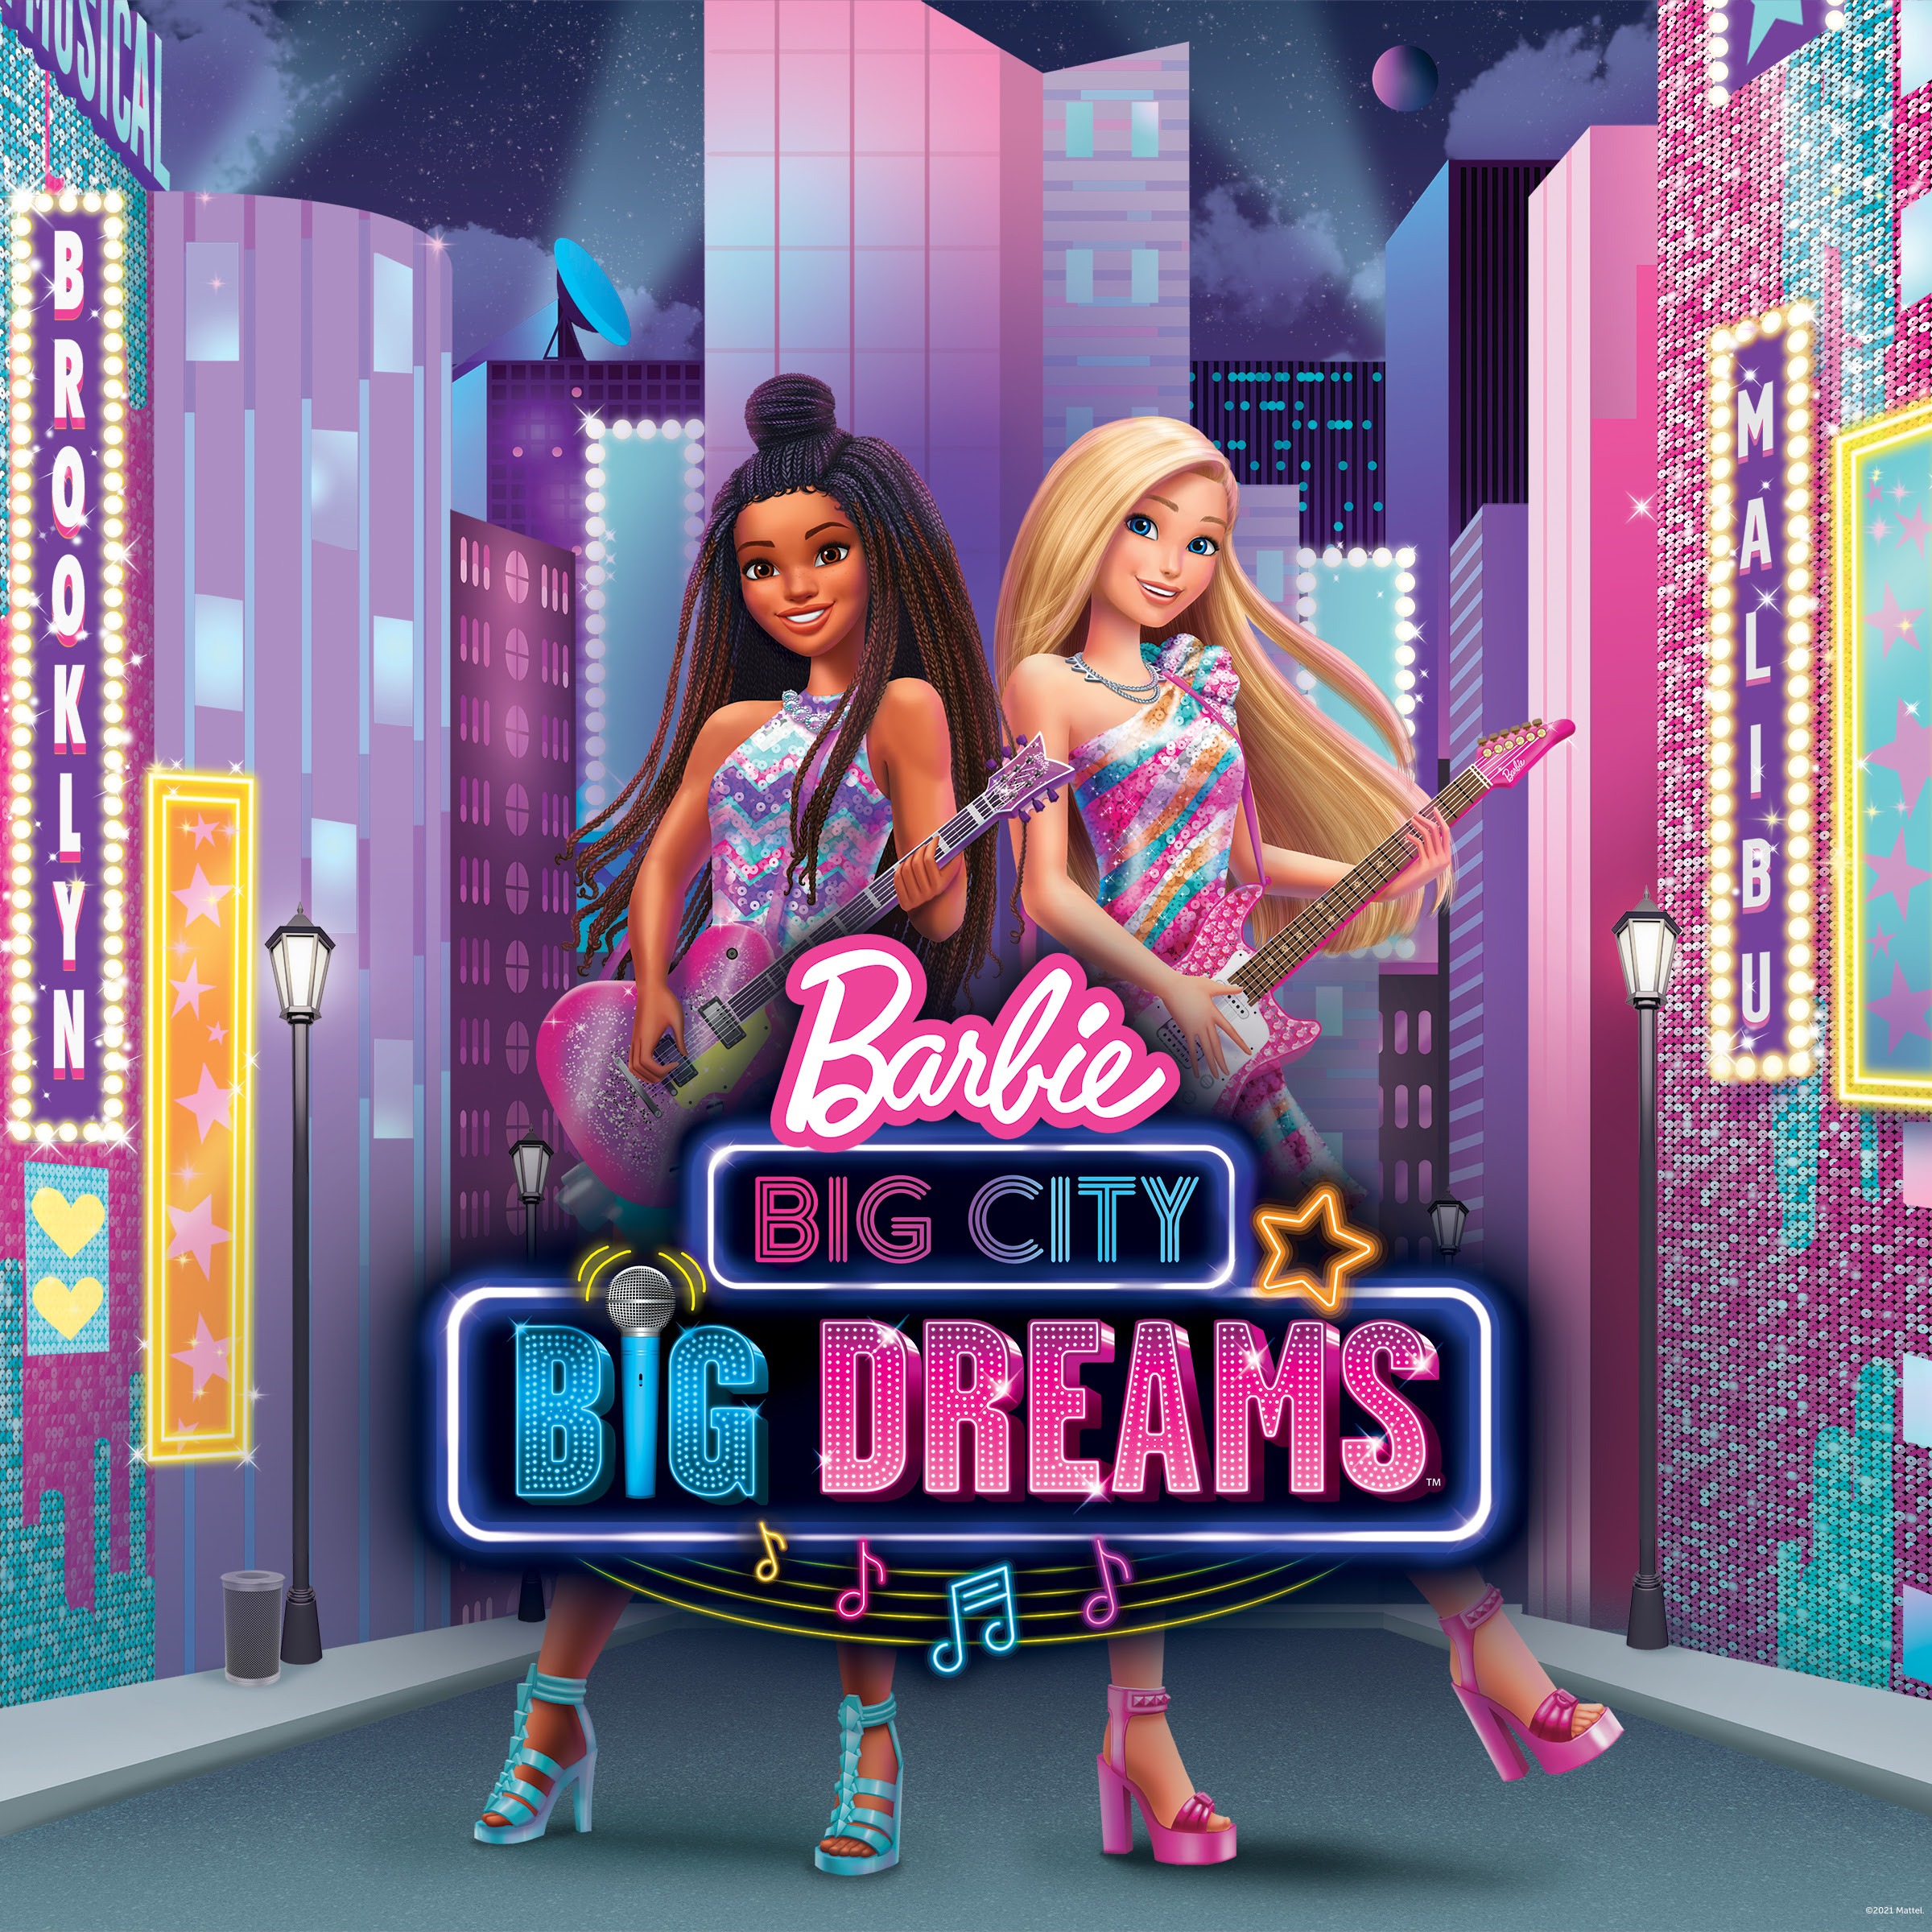 barbie fashion fairytale movie torrent download english